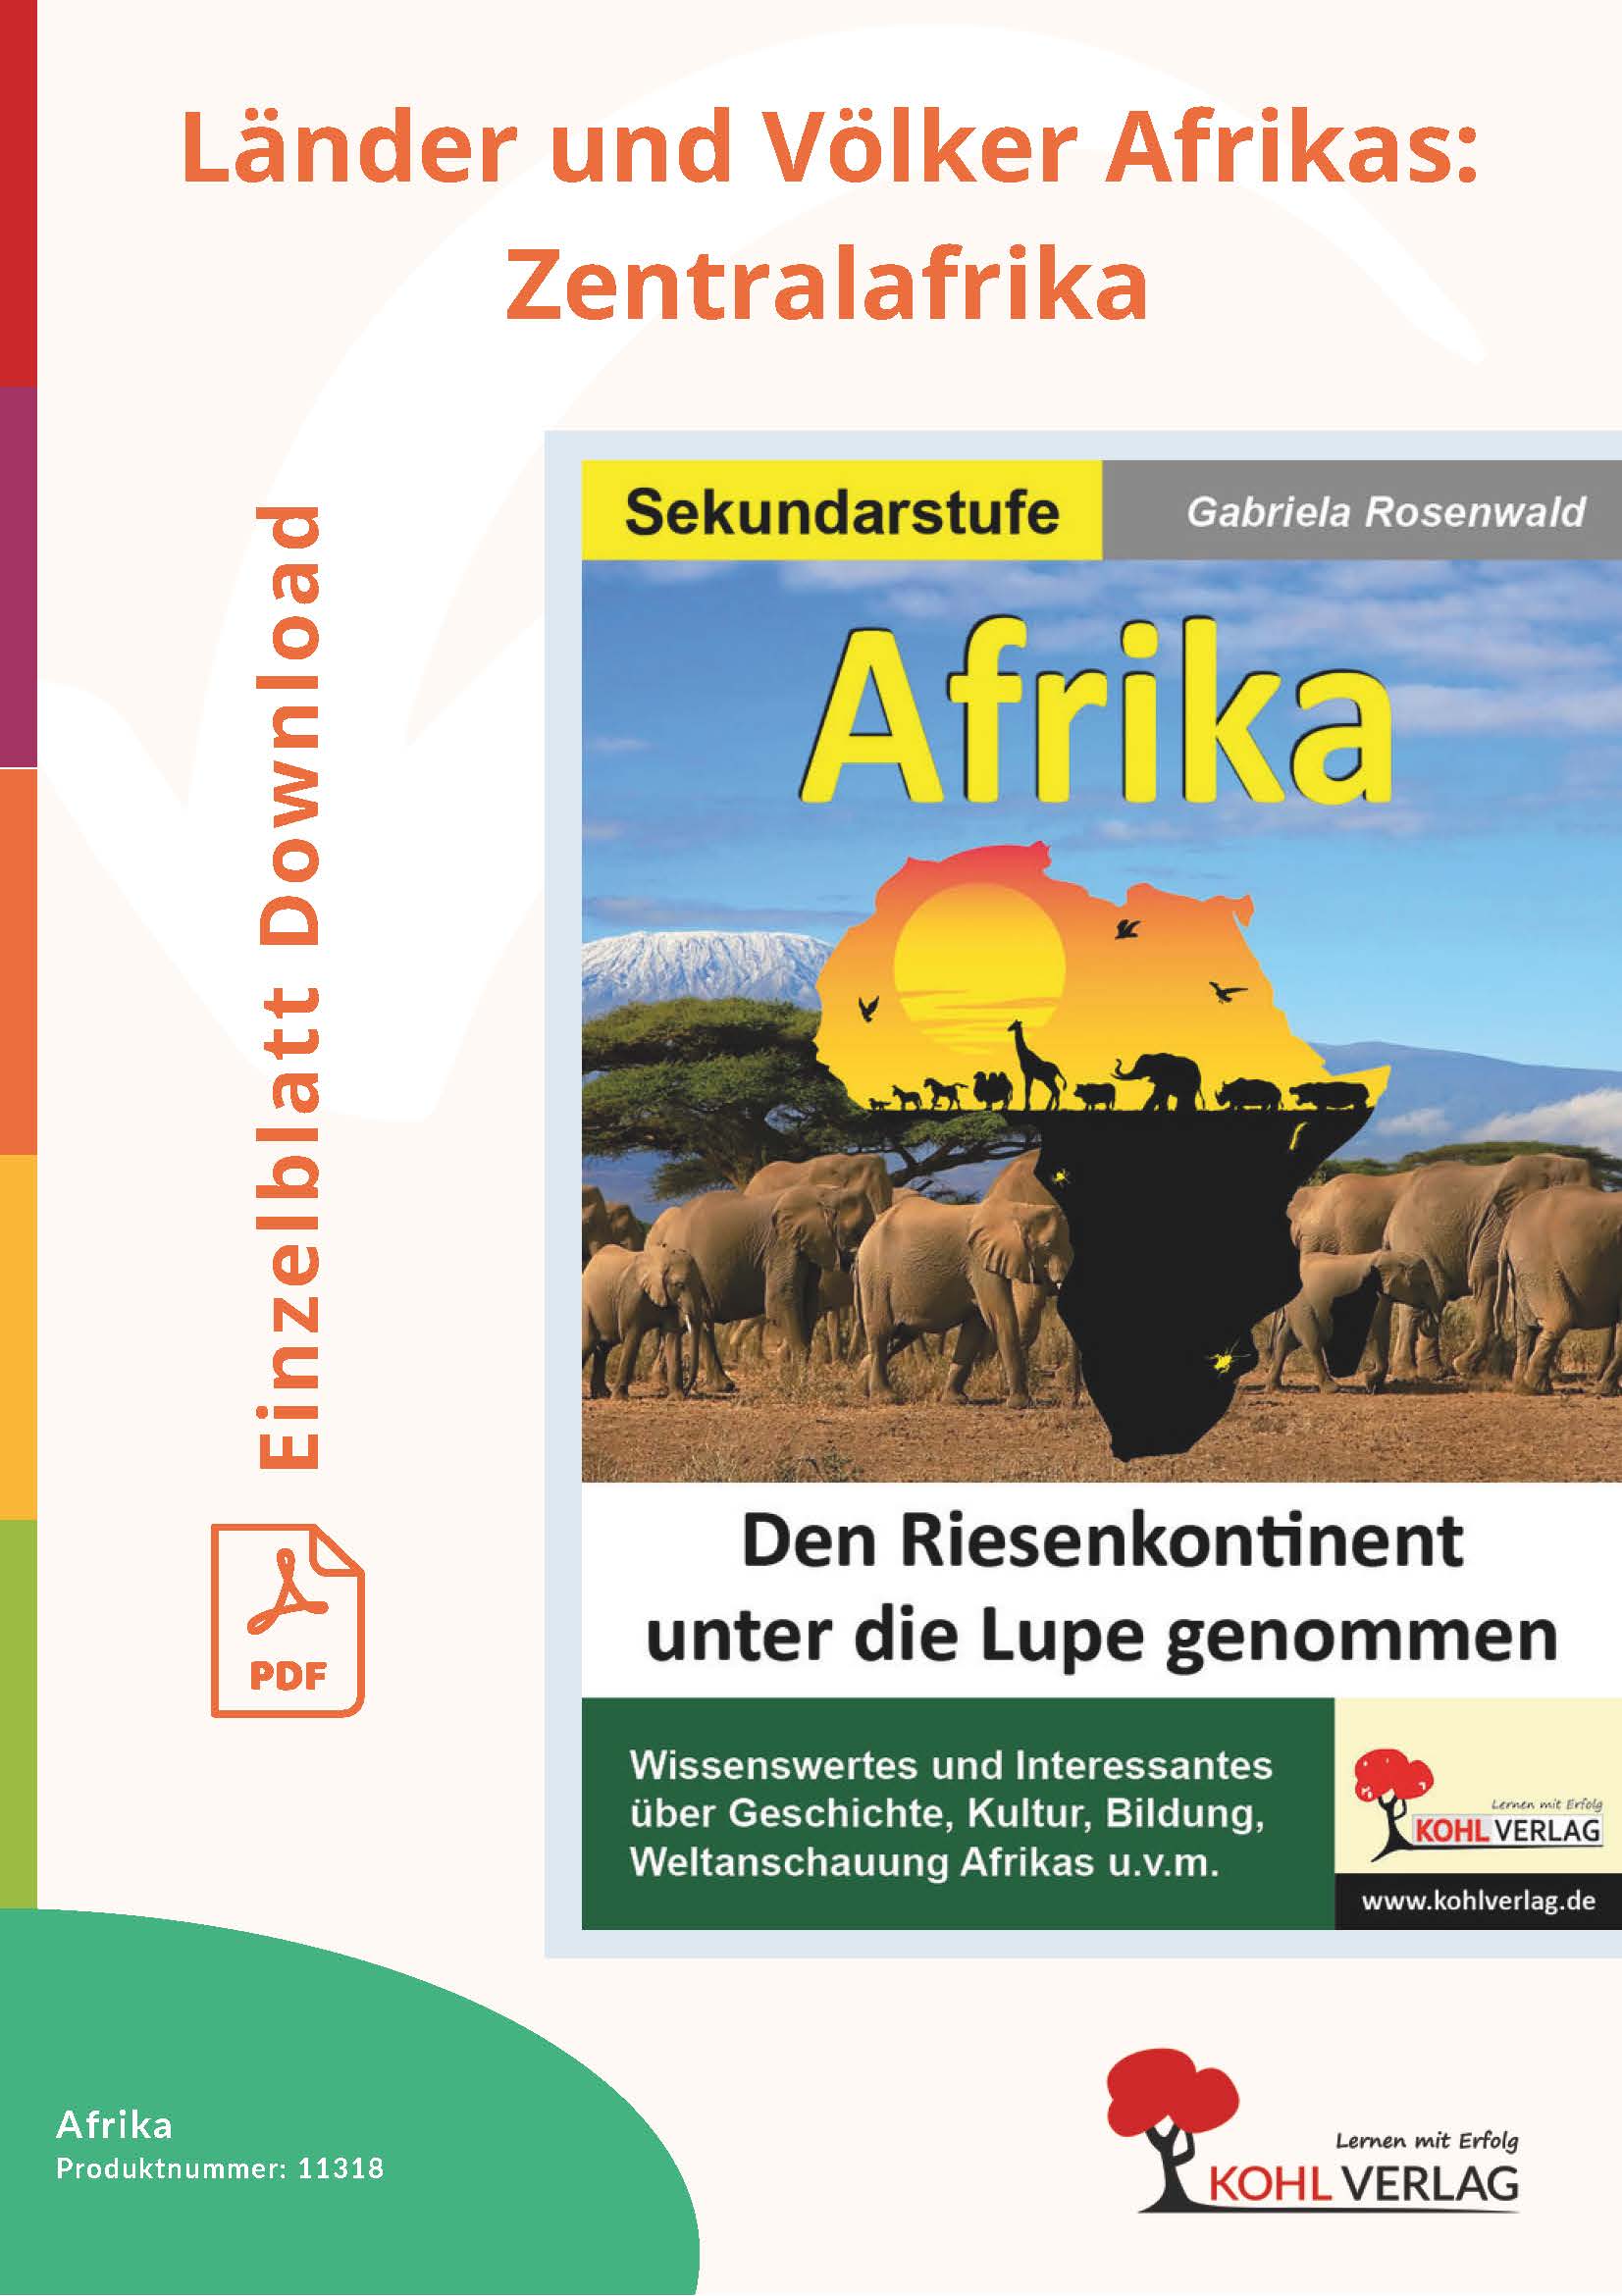 Afrika - Länder und Völker Afrikas: Zentralafrika